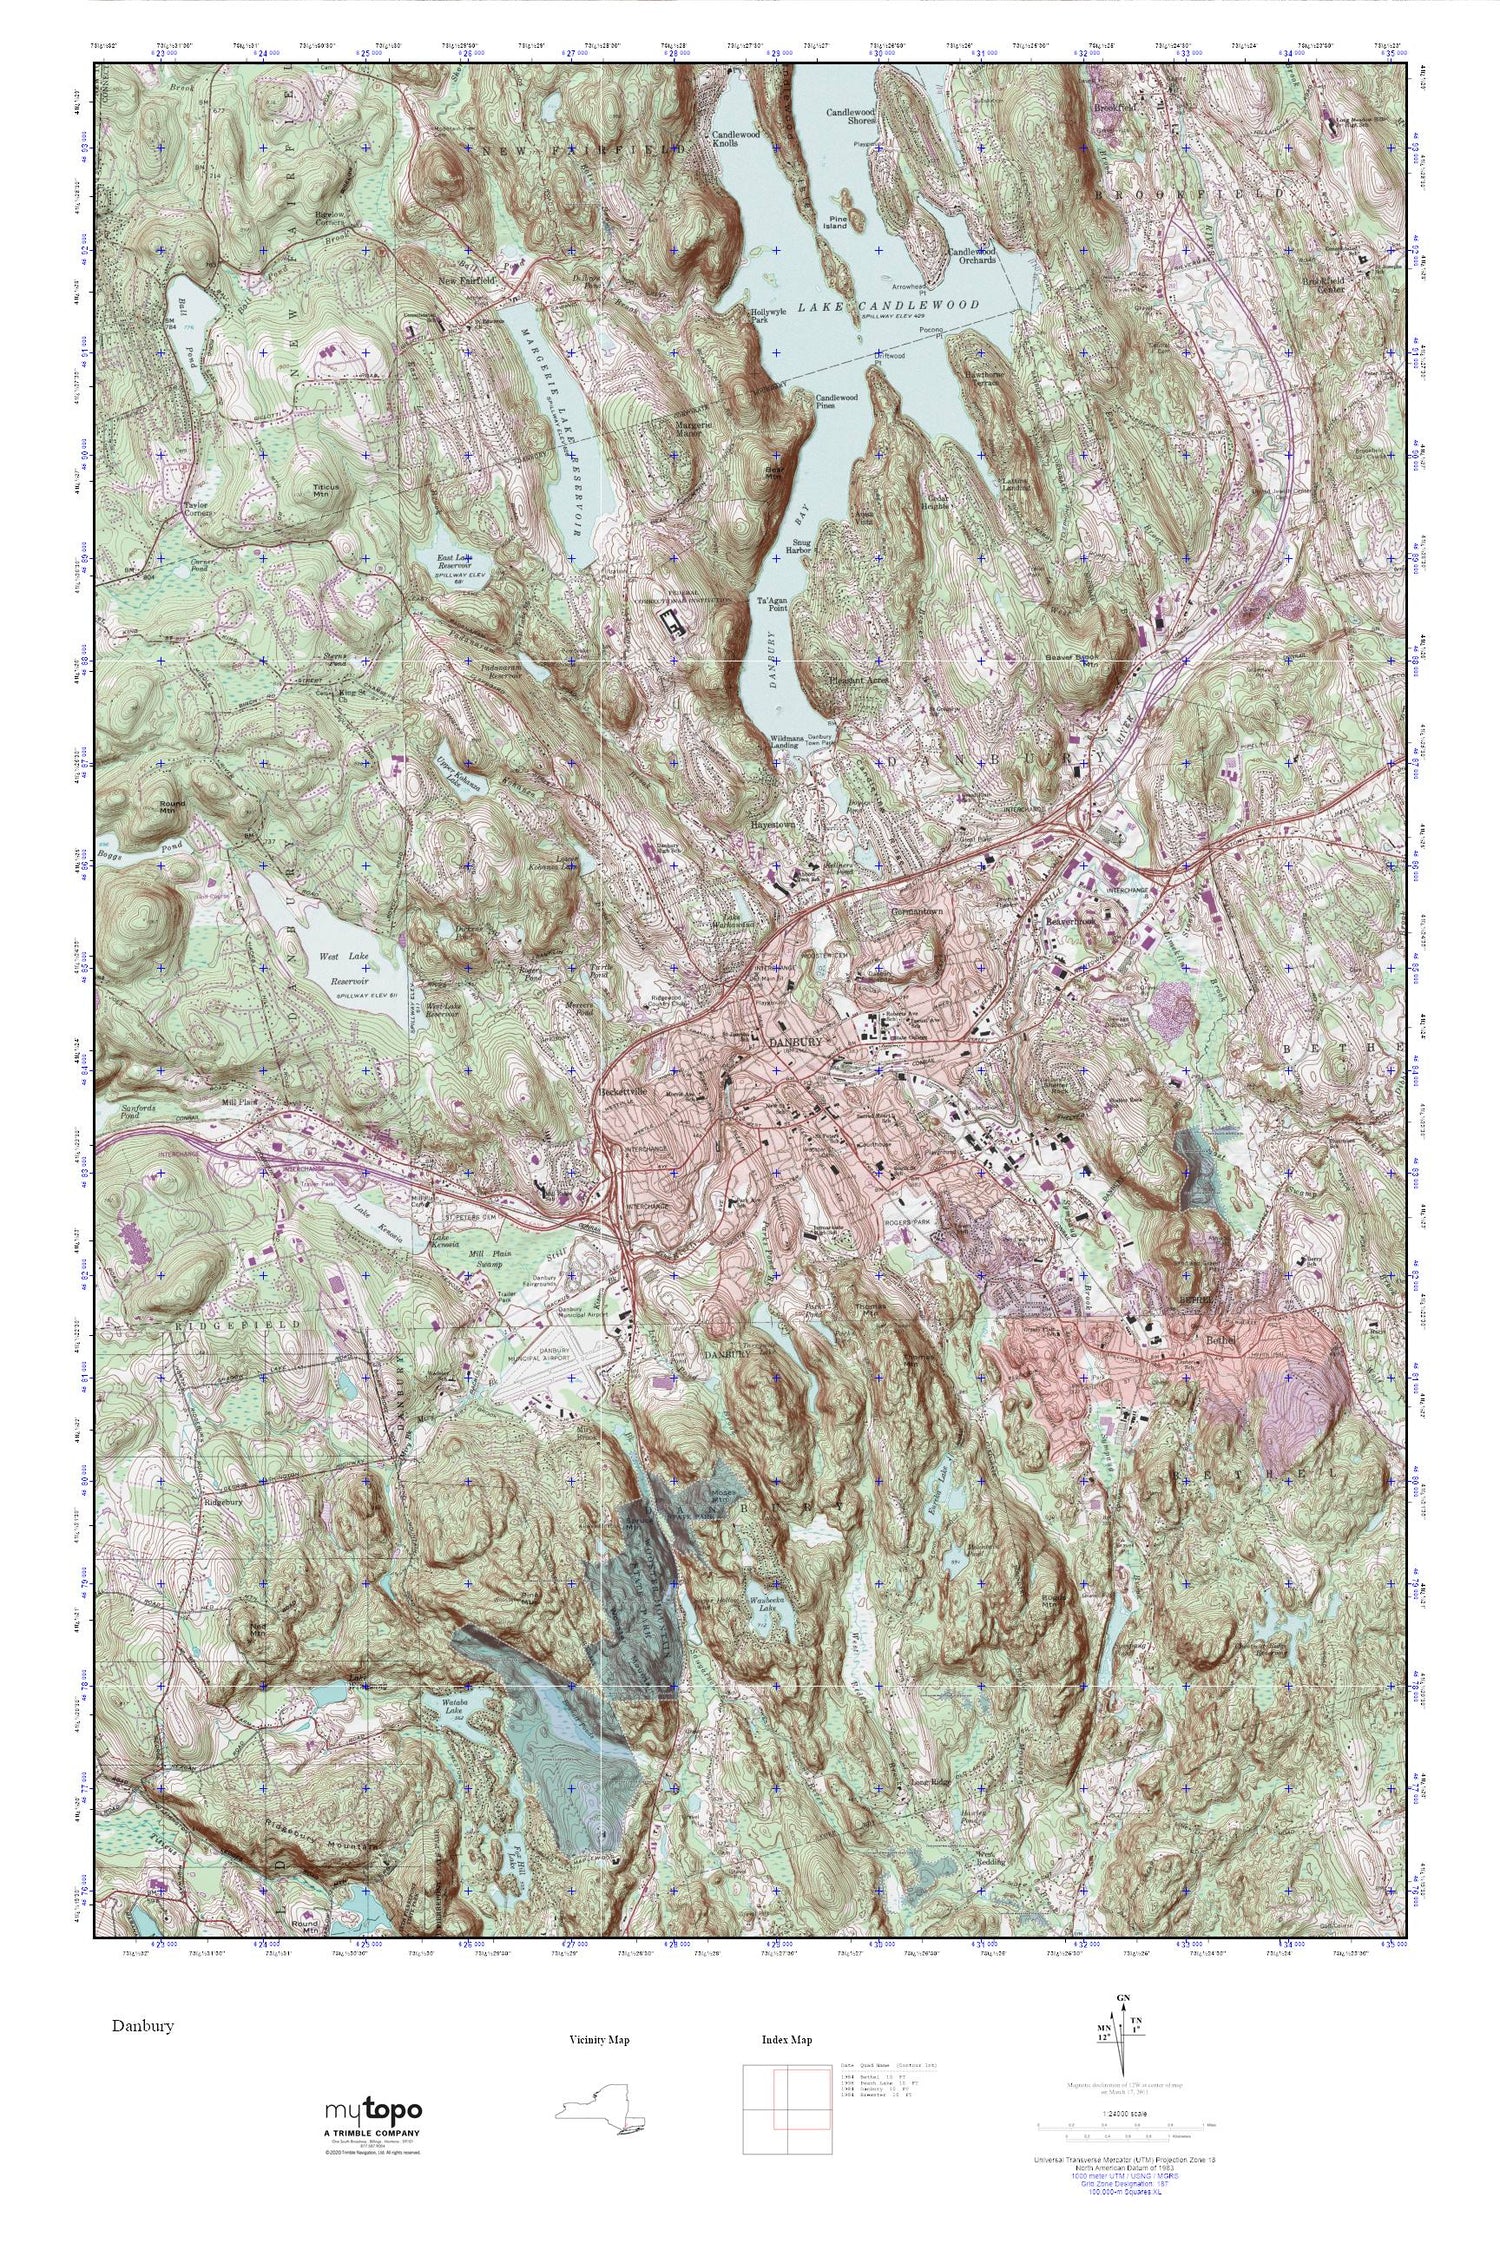 Danbury MyTopo Explorer Series Map Image